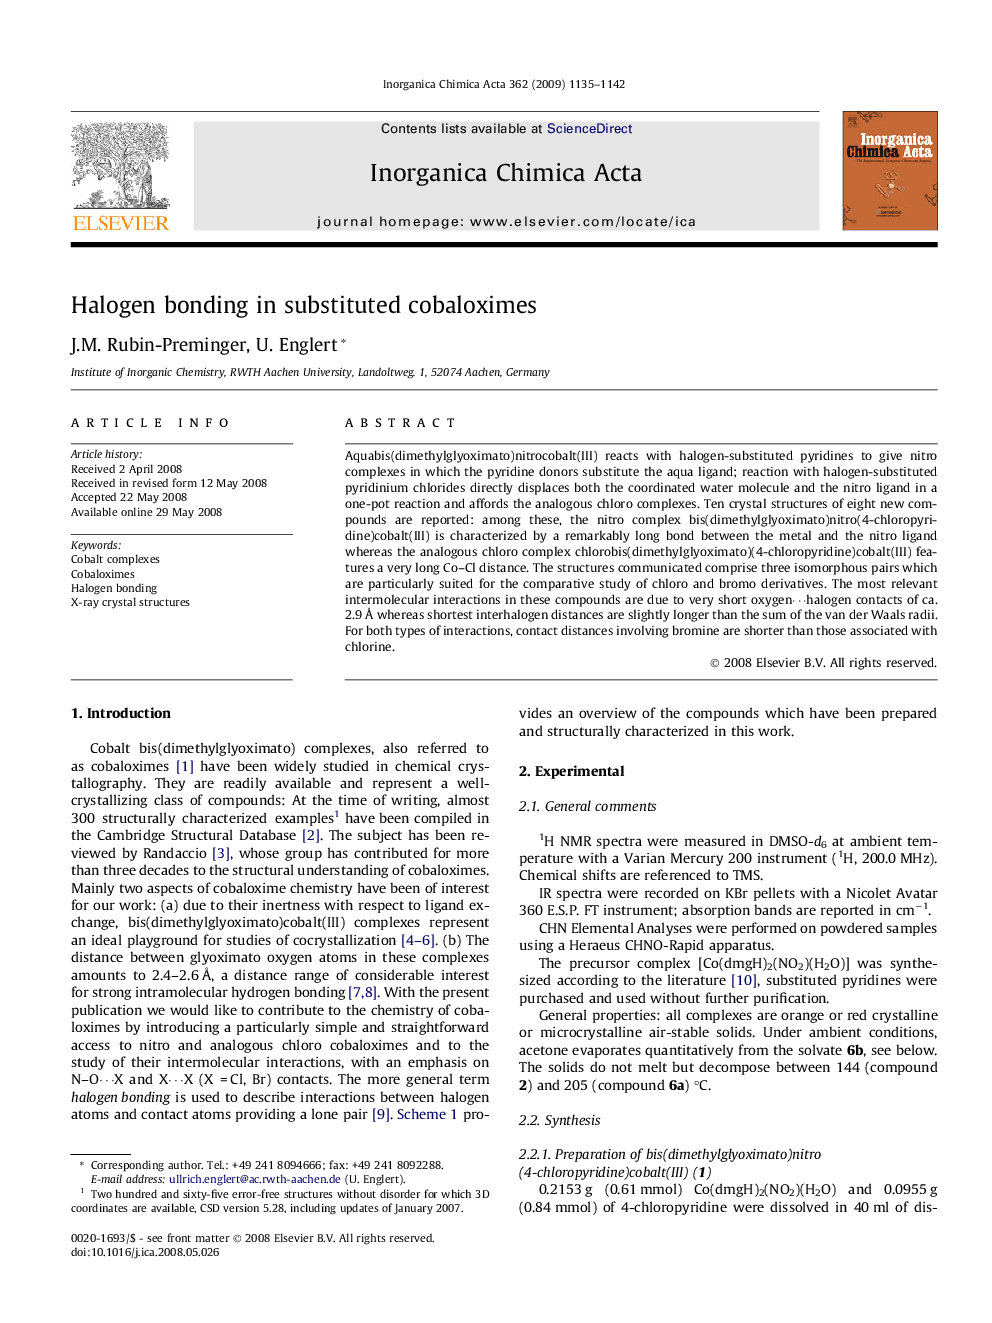 Halogen bonding in substituted cobaloximes